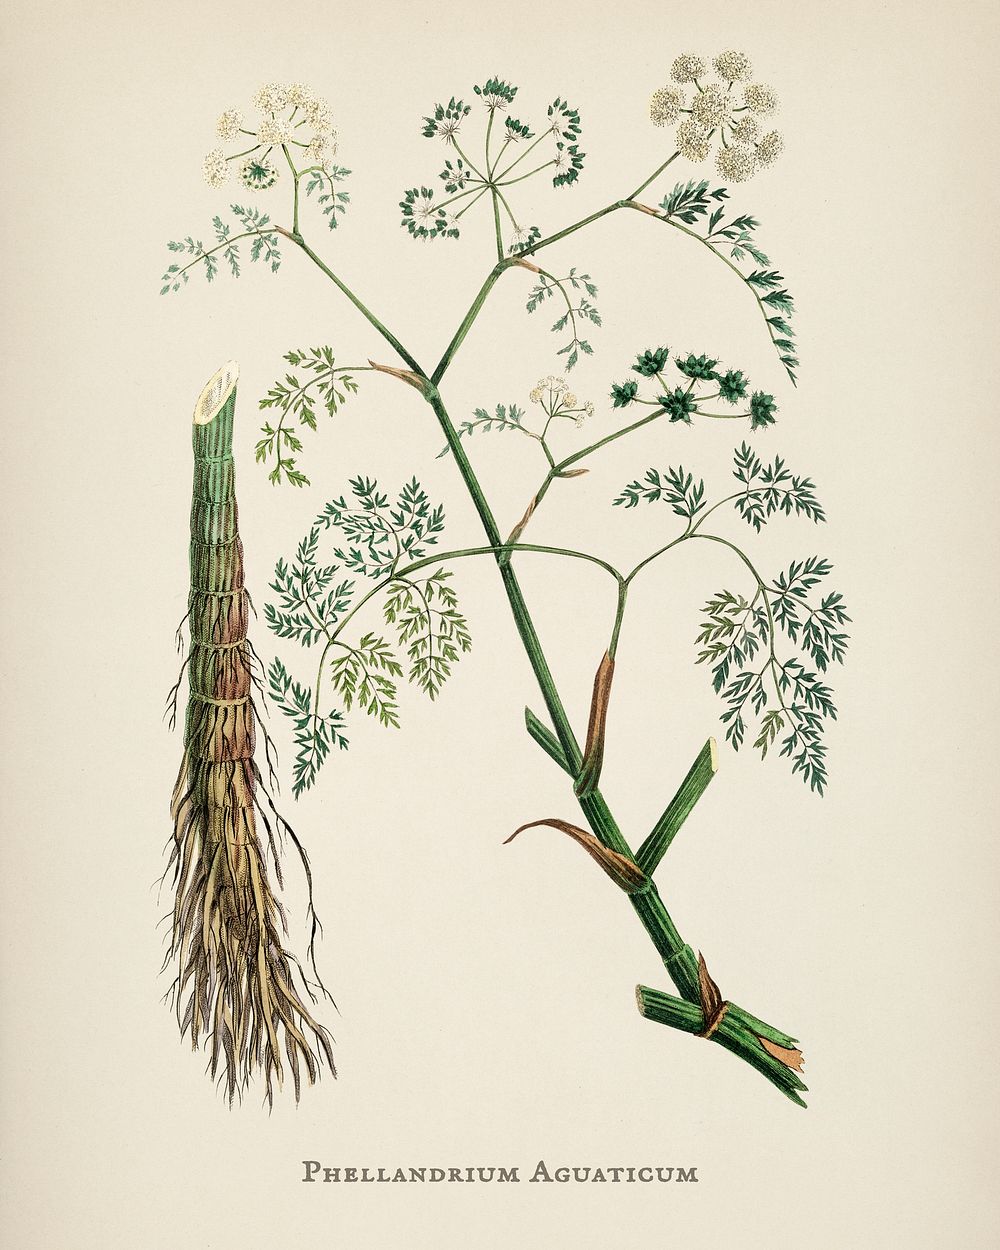 Phellandrium aguaticum illustration from Medical Botany (1836) by John Stephenson and James Morss Churchill.